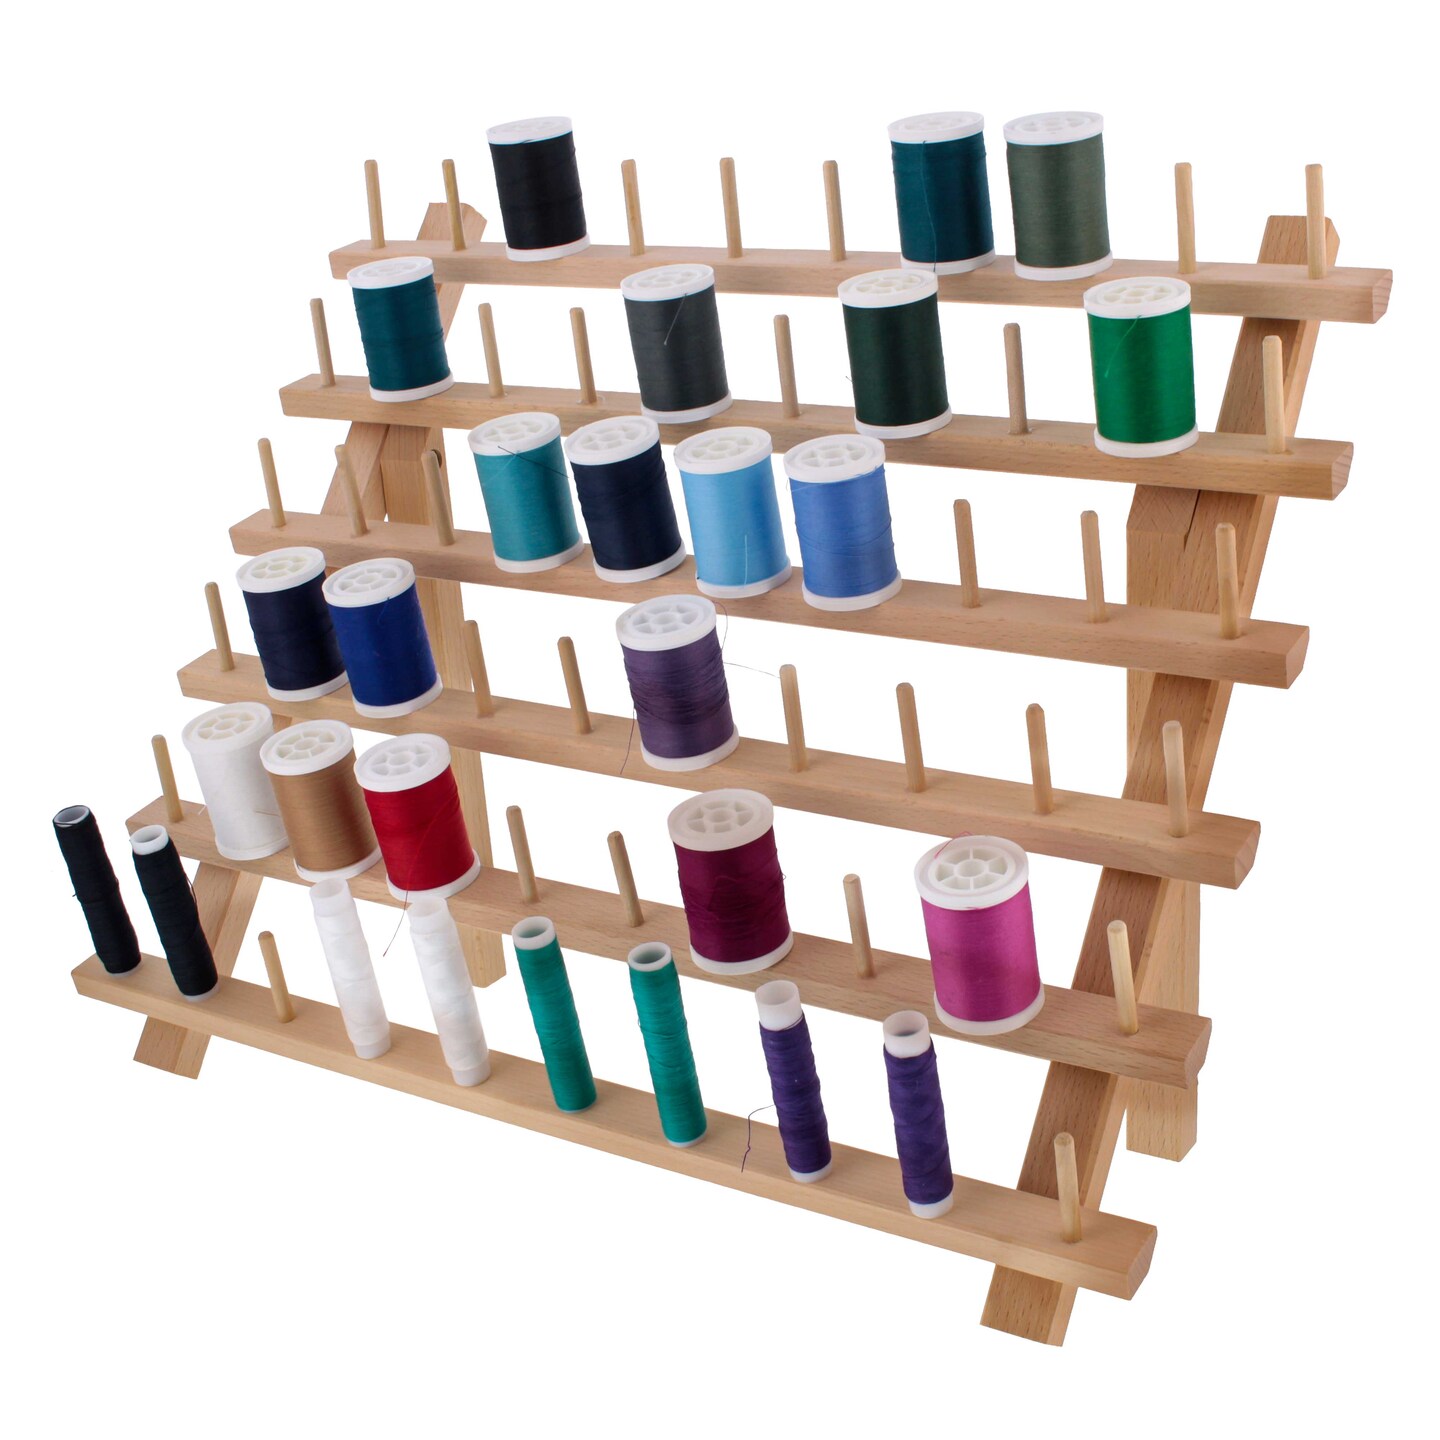 60-spool Thread Rack, Wooden Thread Holder Sewing Organizer for